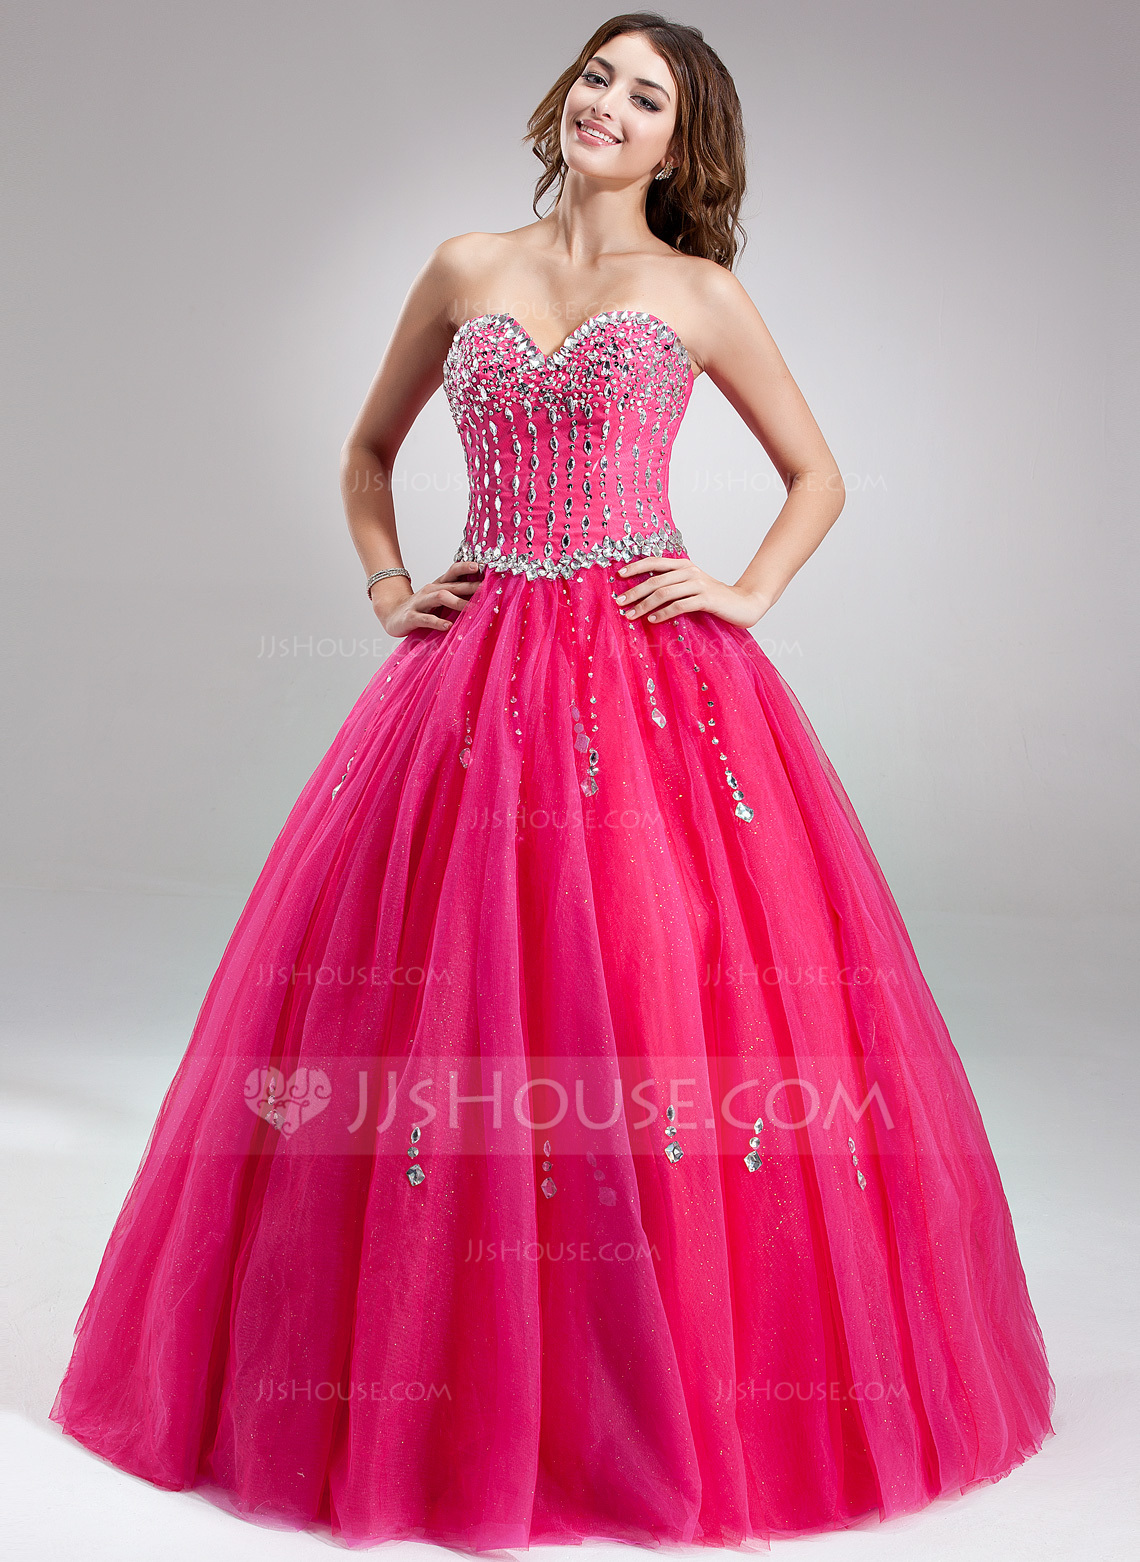 pink prom dress.jpg